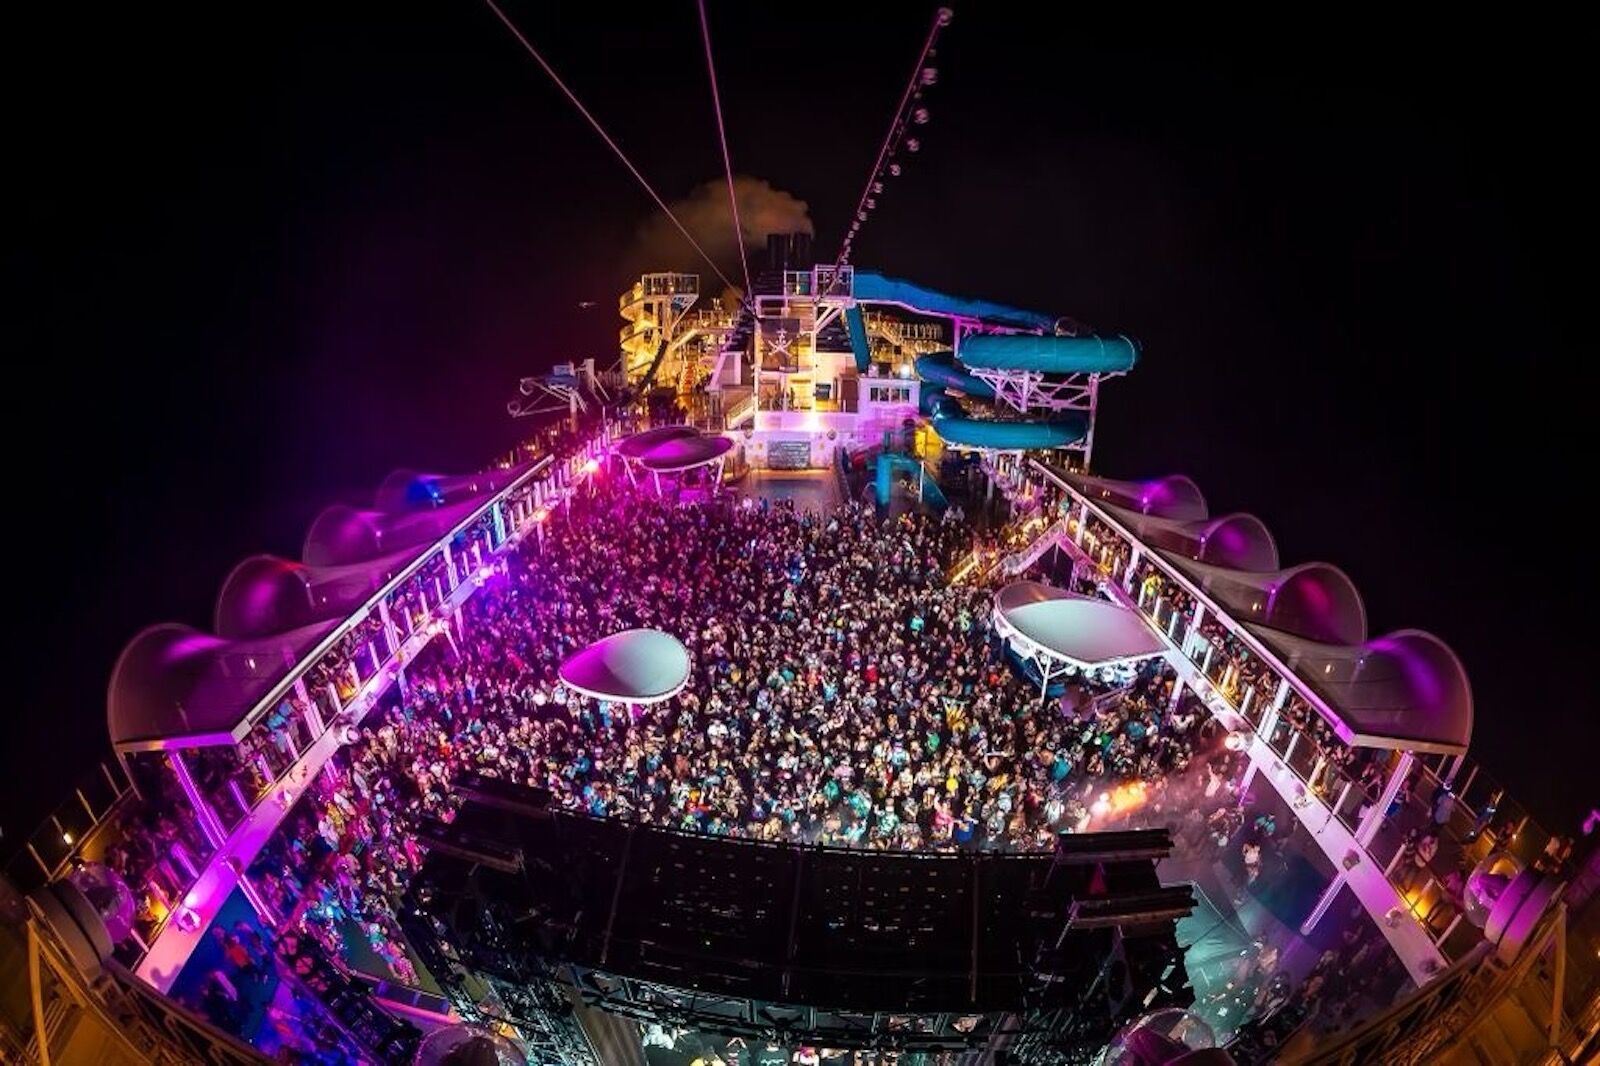 FriendShip cruise: What an EDM Festival on a cruise ship looks like